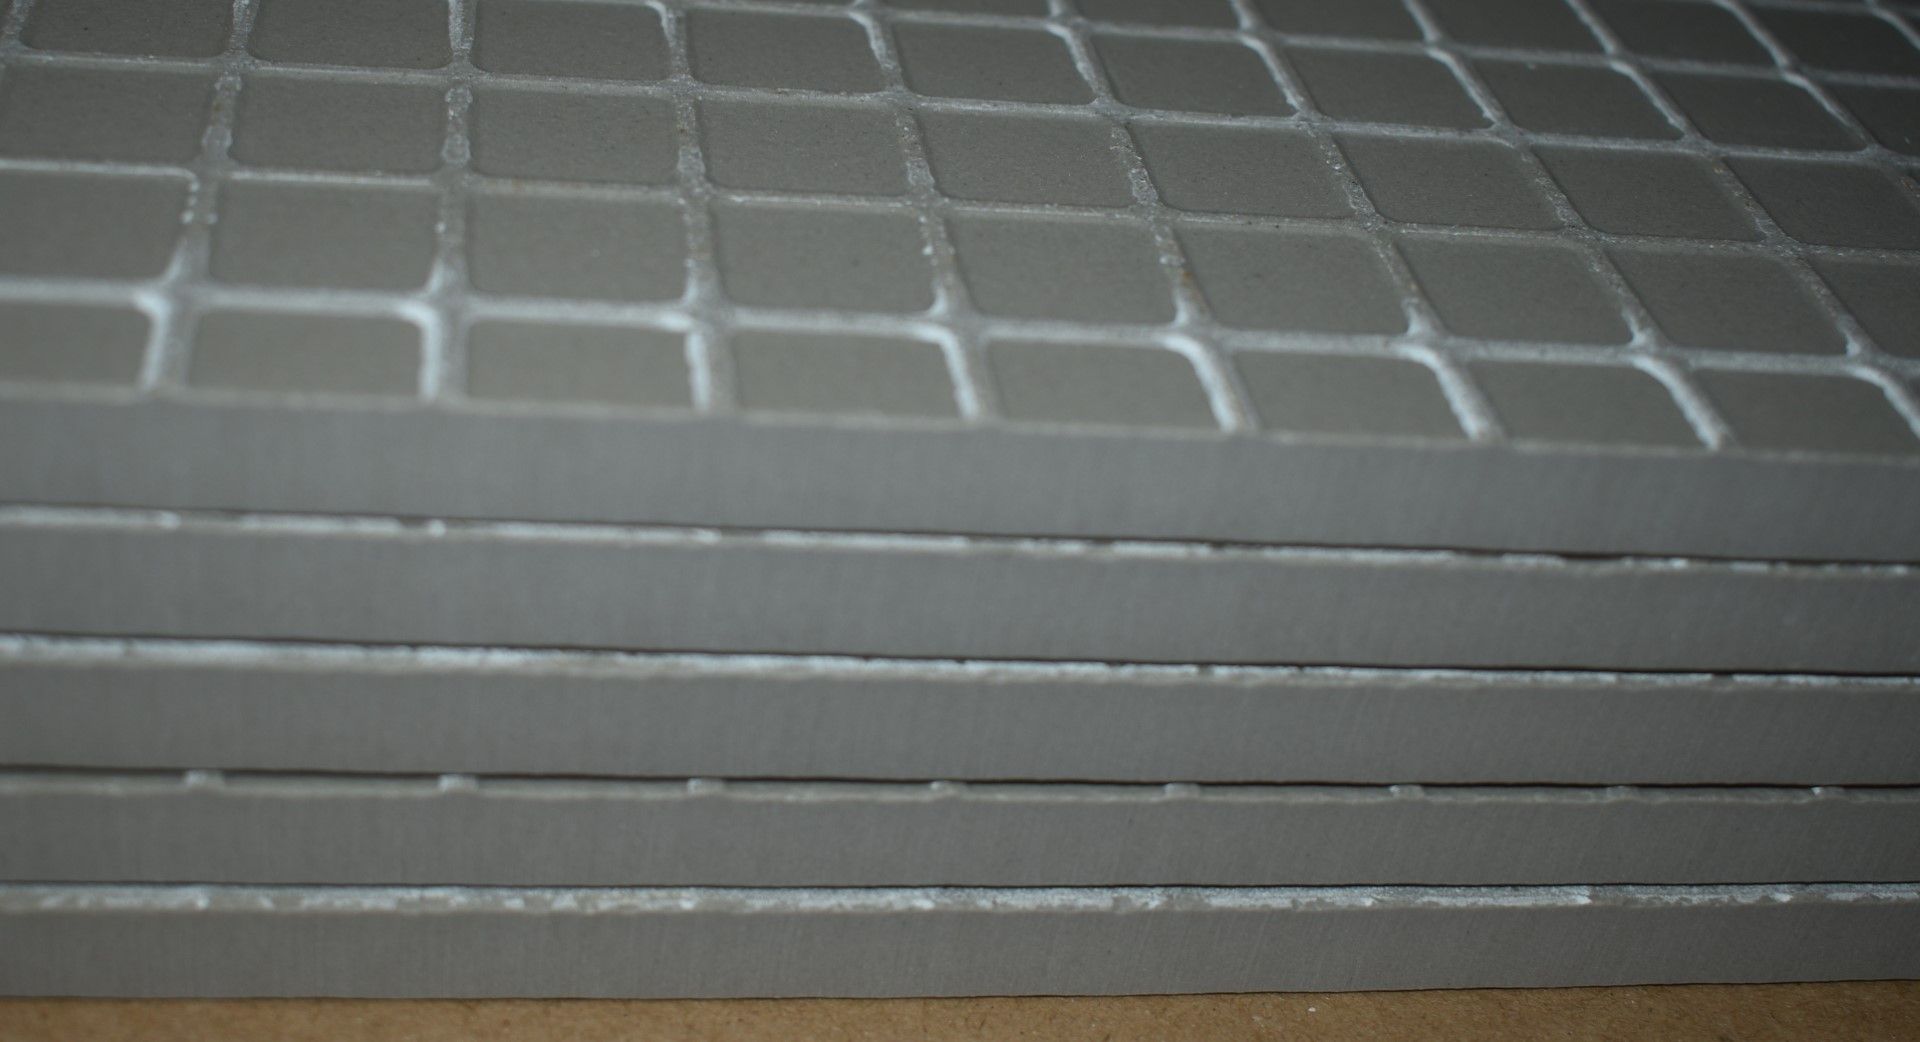 9 x Boxes of RAK Porcelain Floor or Wall Tiles - M Project Wood Design in Light Grey - 19.5 x 120 cm - Bild 7 aus 7